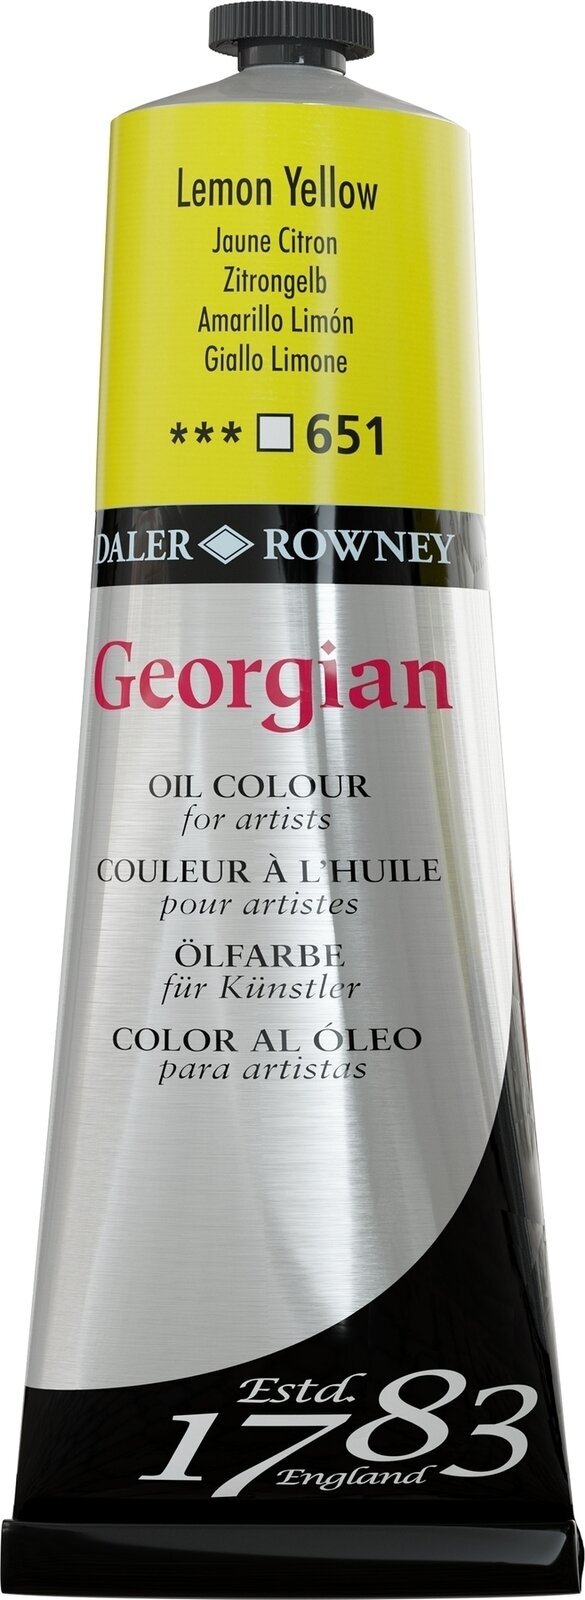 Oil colour Daler Rowney Georgian Oil Paint Lemon Yellow 225 ml 1 pc